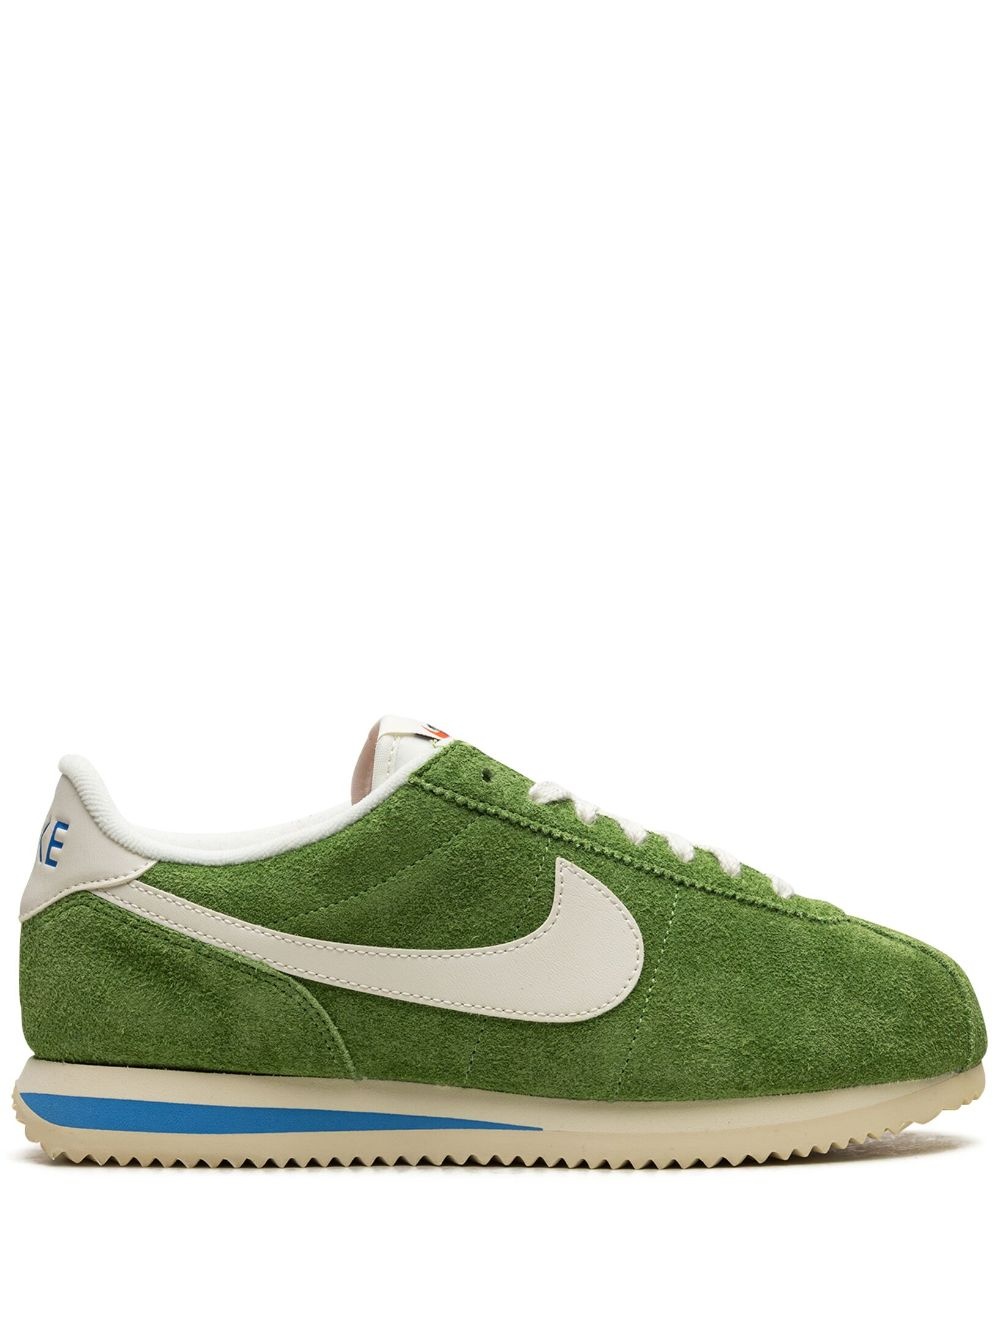 Cortez "Vintage Green" sneakers - 1